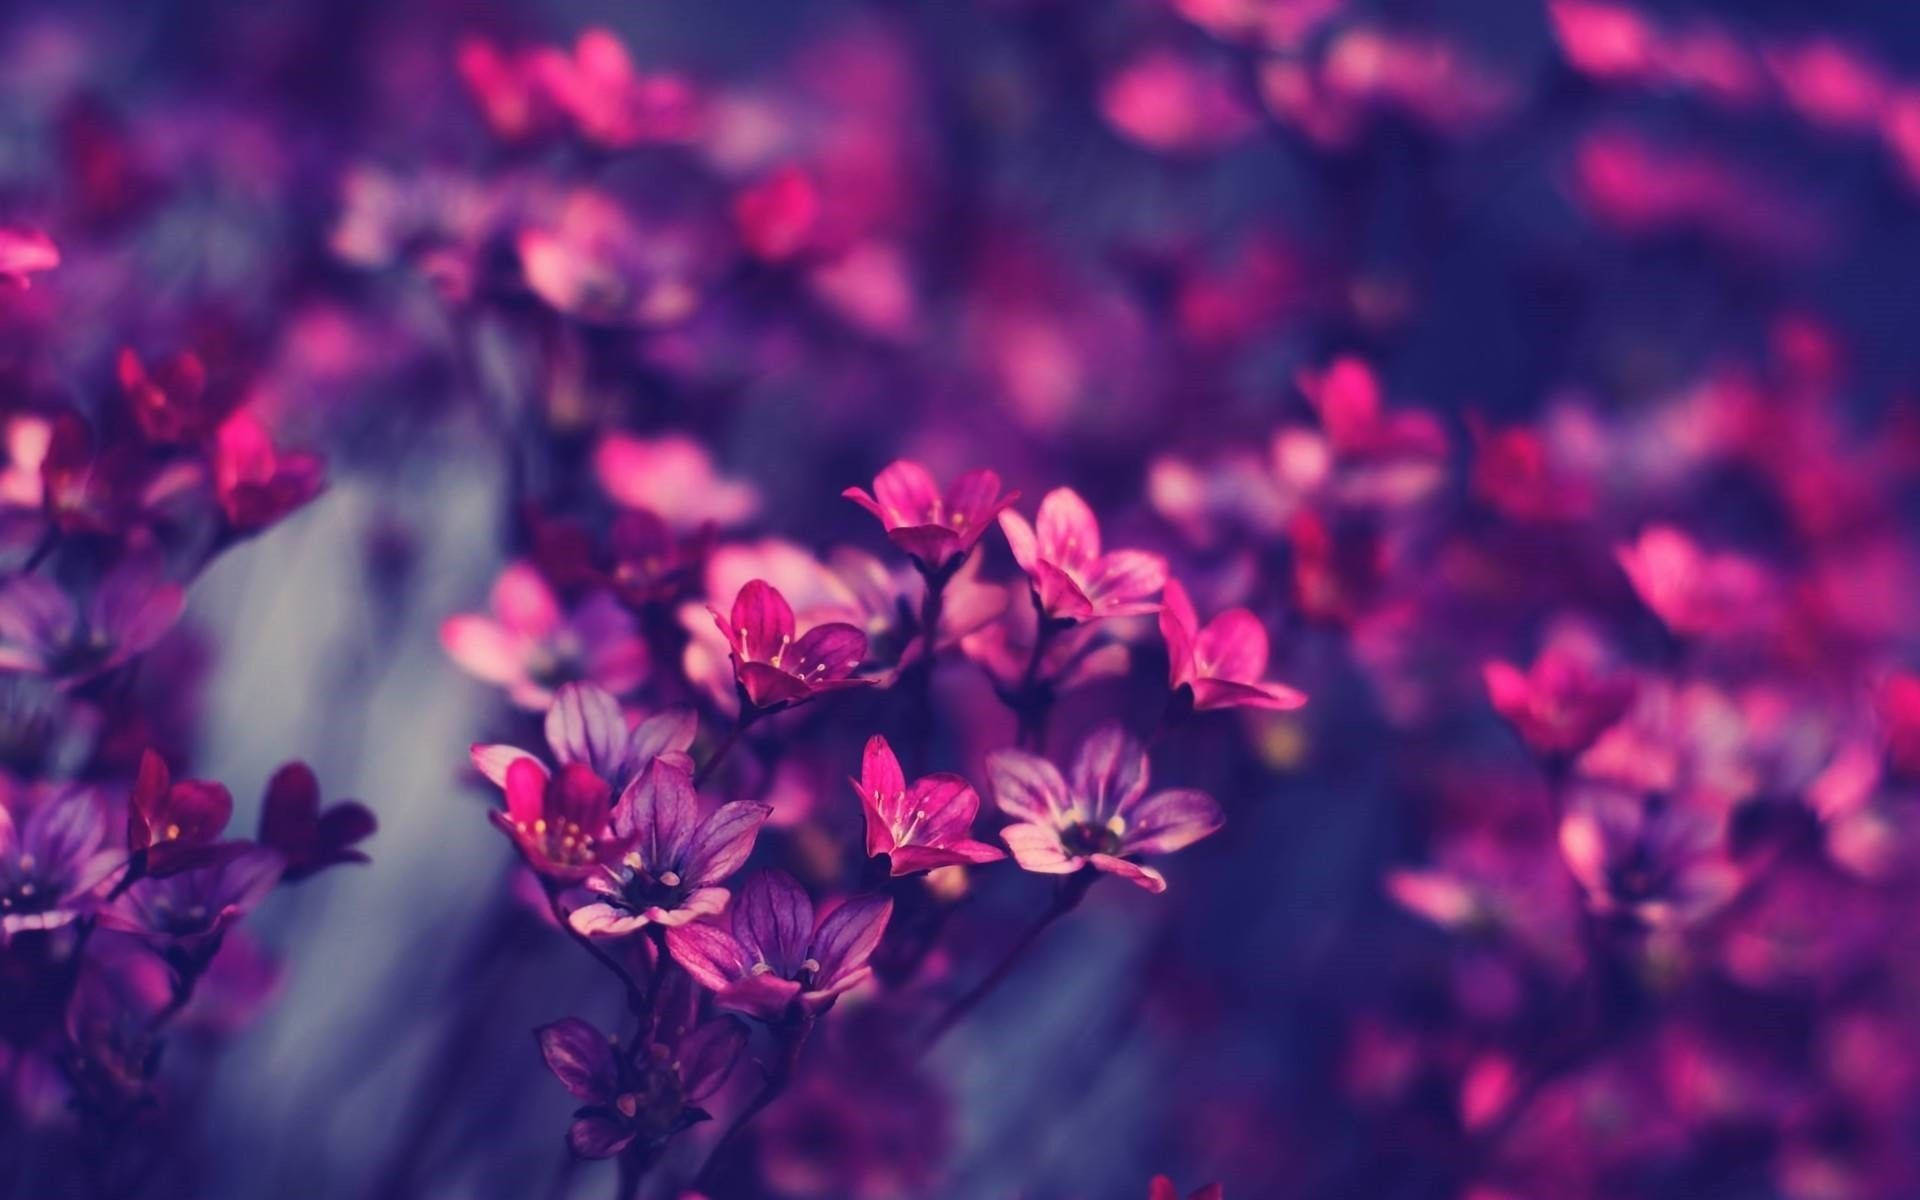 A beautiful purple flower surrounded by lush greenery Wallpaper